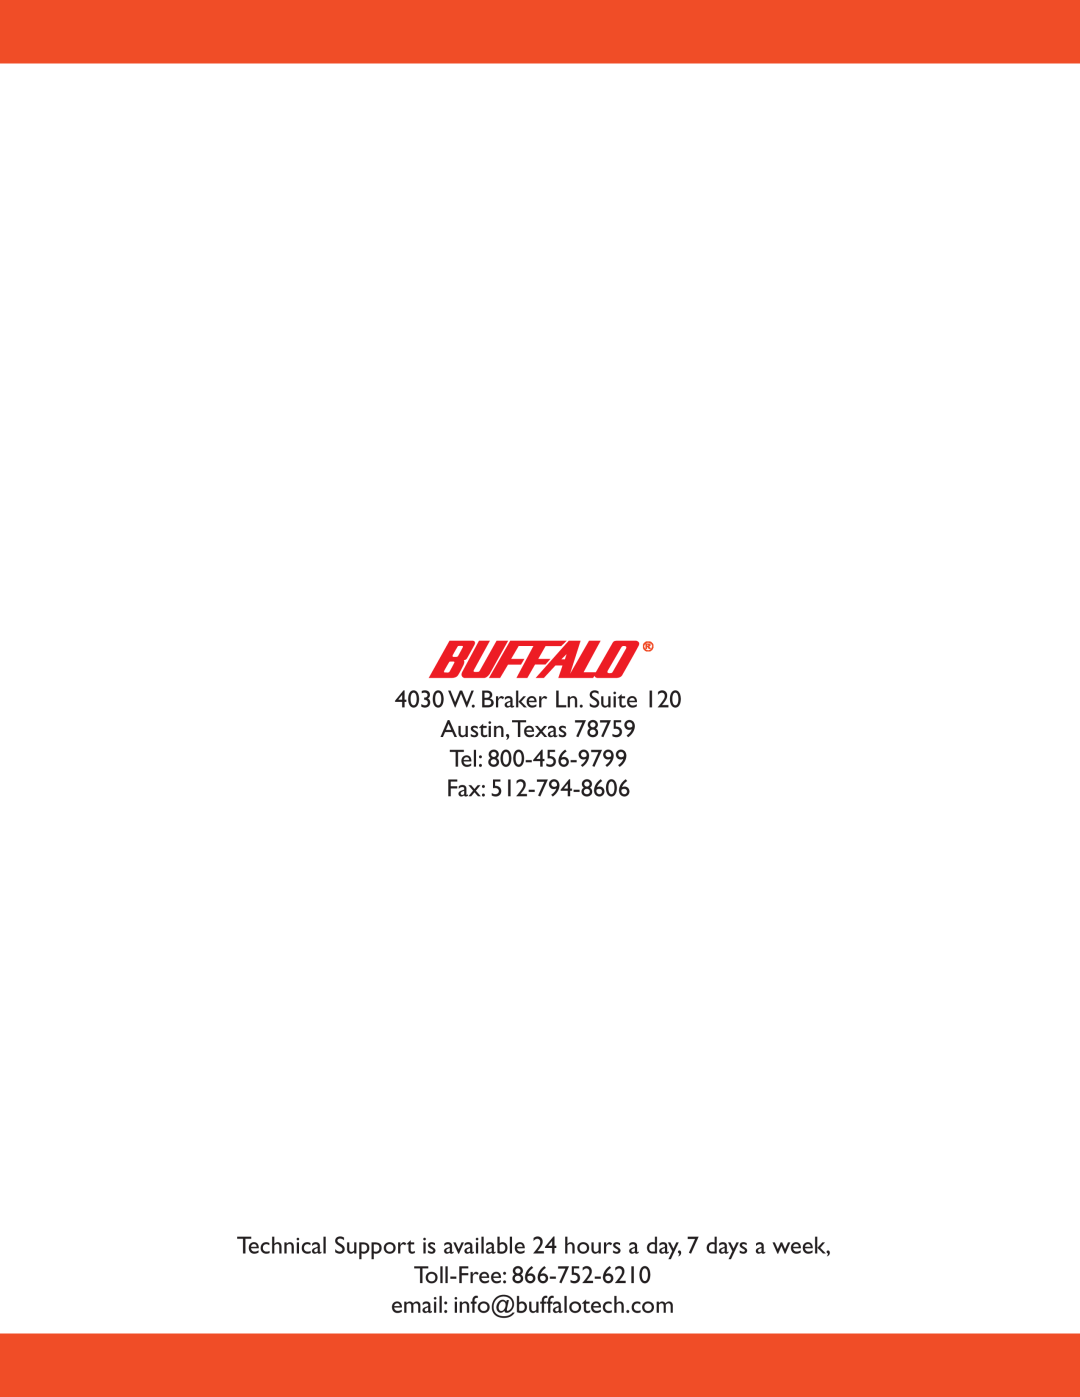 Buffalo Technology WLA2-G54 user manual 4030 W. Braker Ln. Suite Austin,Texas Tel Fax, Toll-Free email info@buffalotech.com 